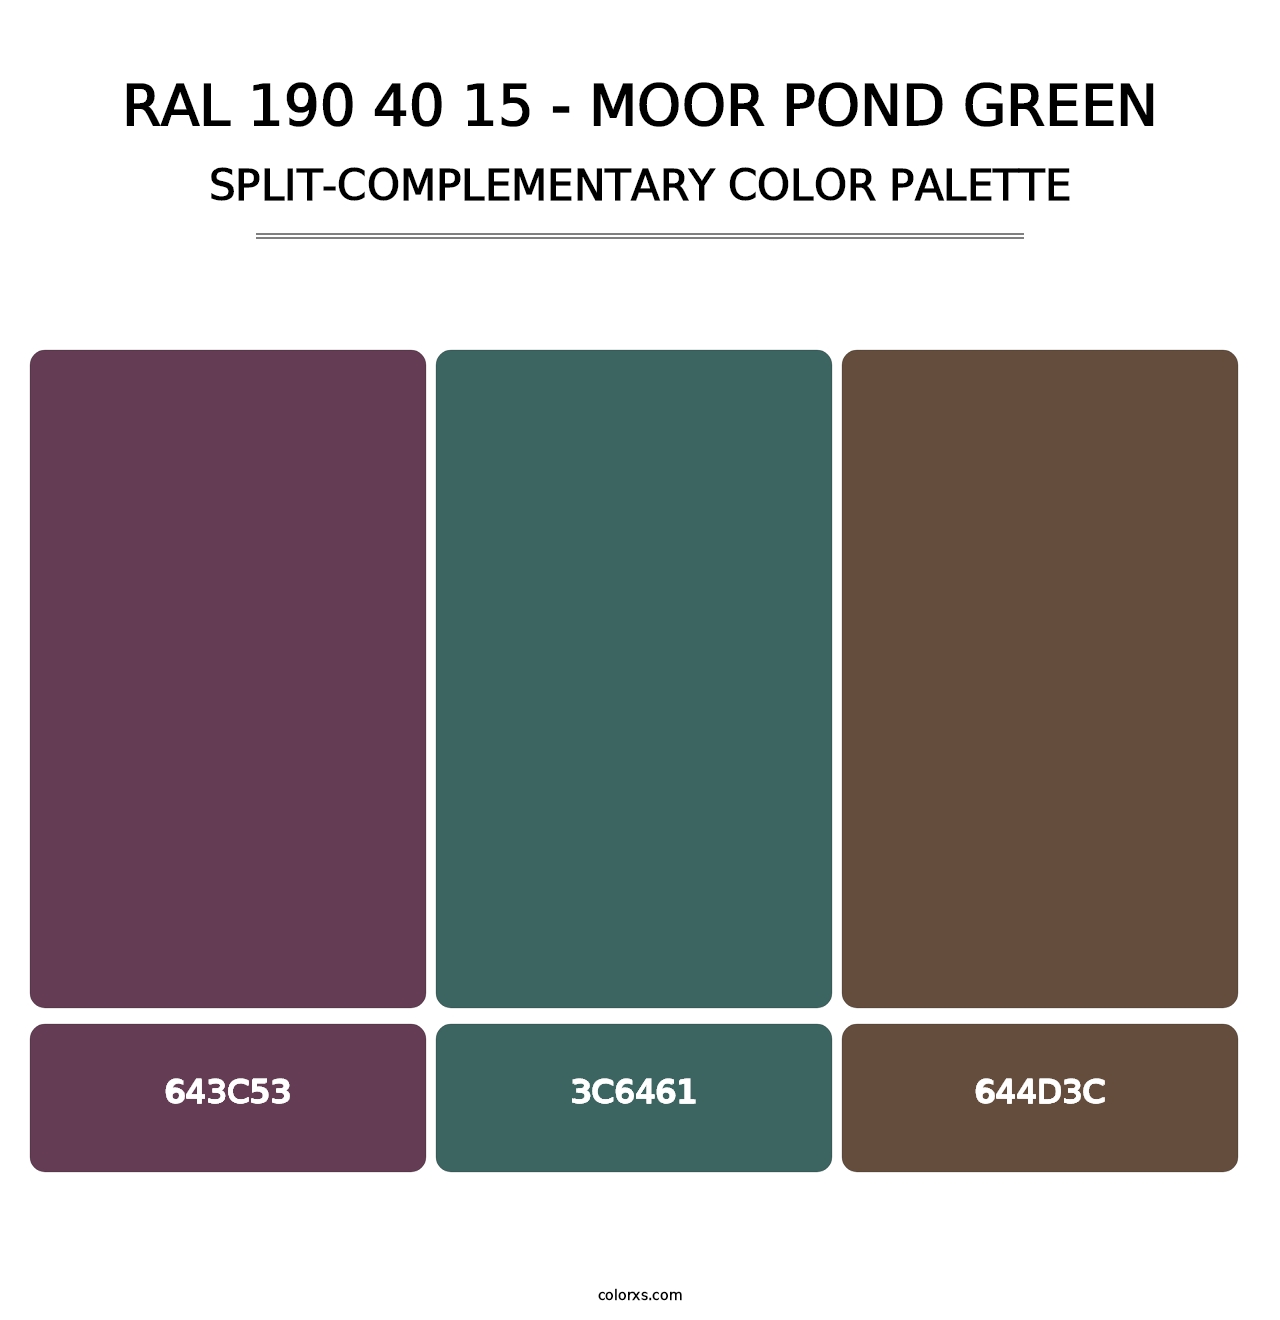 RAL 190 40 15 - Moor Pond Green - Split-Complementary Color Palette